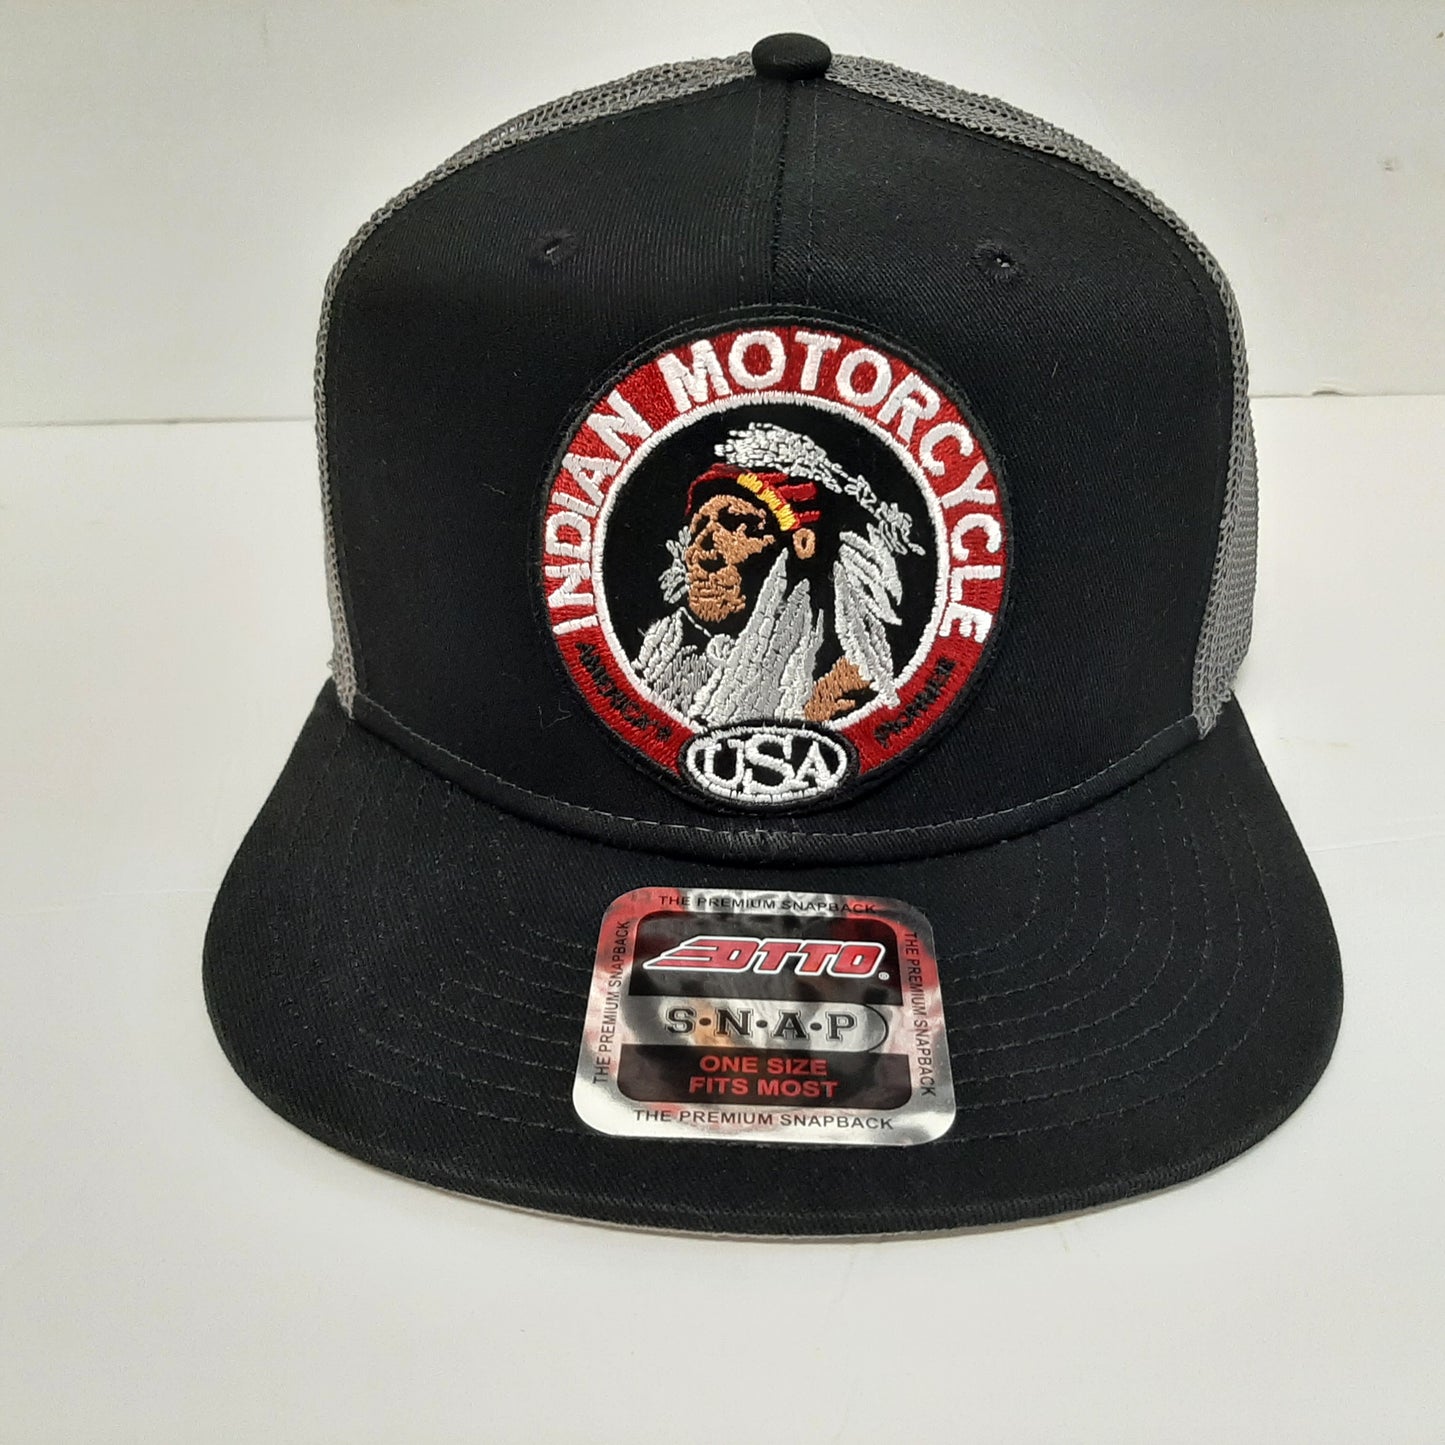 Otto Snapback Trucker Indian Motorcycles Patch Baseball Cap Hat Black Flat Bill